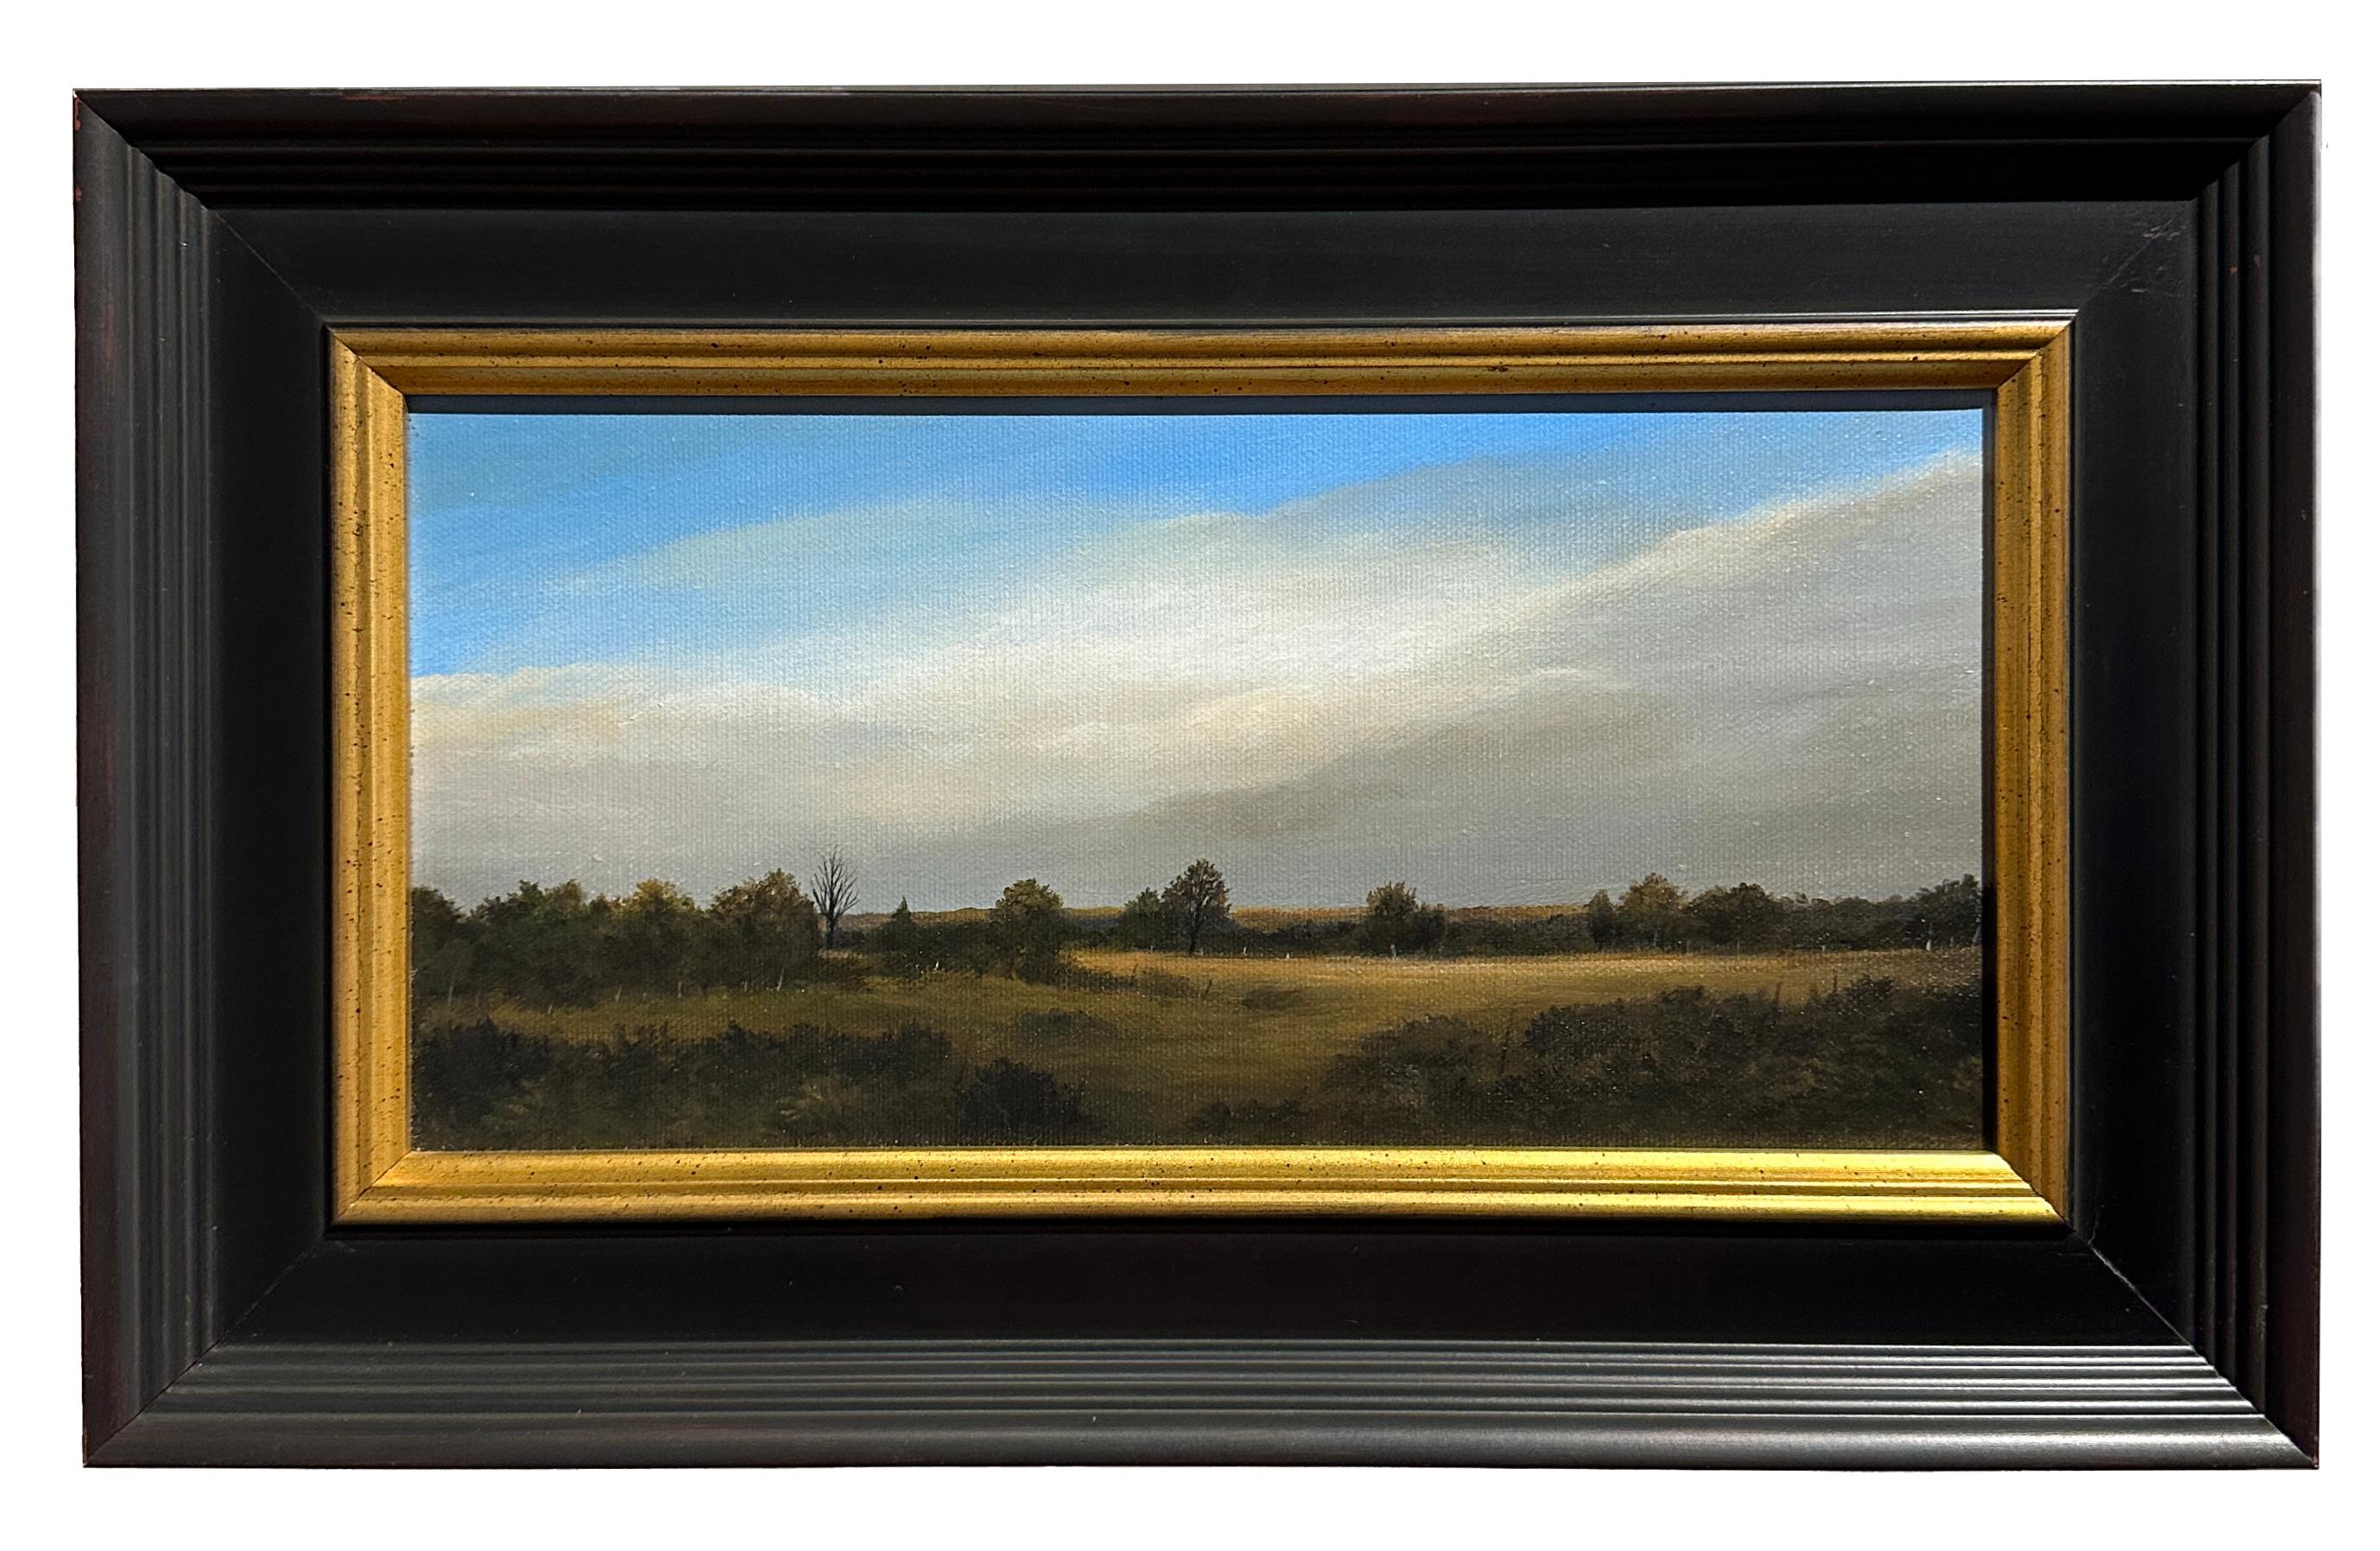 Ahzad Bogosian Landscape Painting - Early November - Serene Wooded Landscape with Cloud Filled Sky, Original Oil